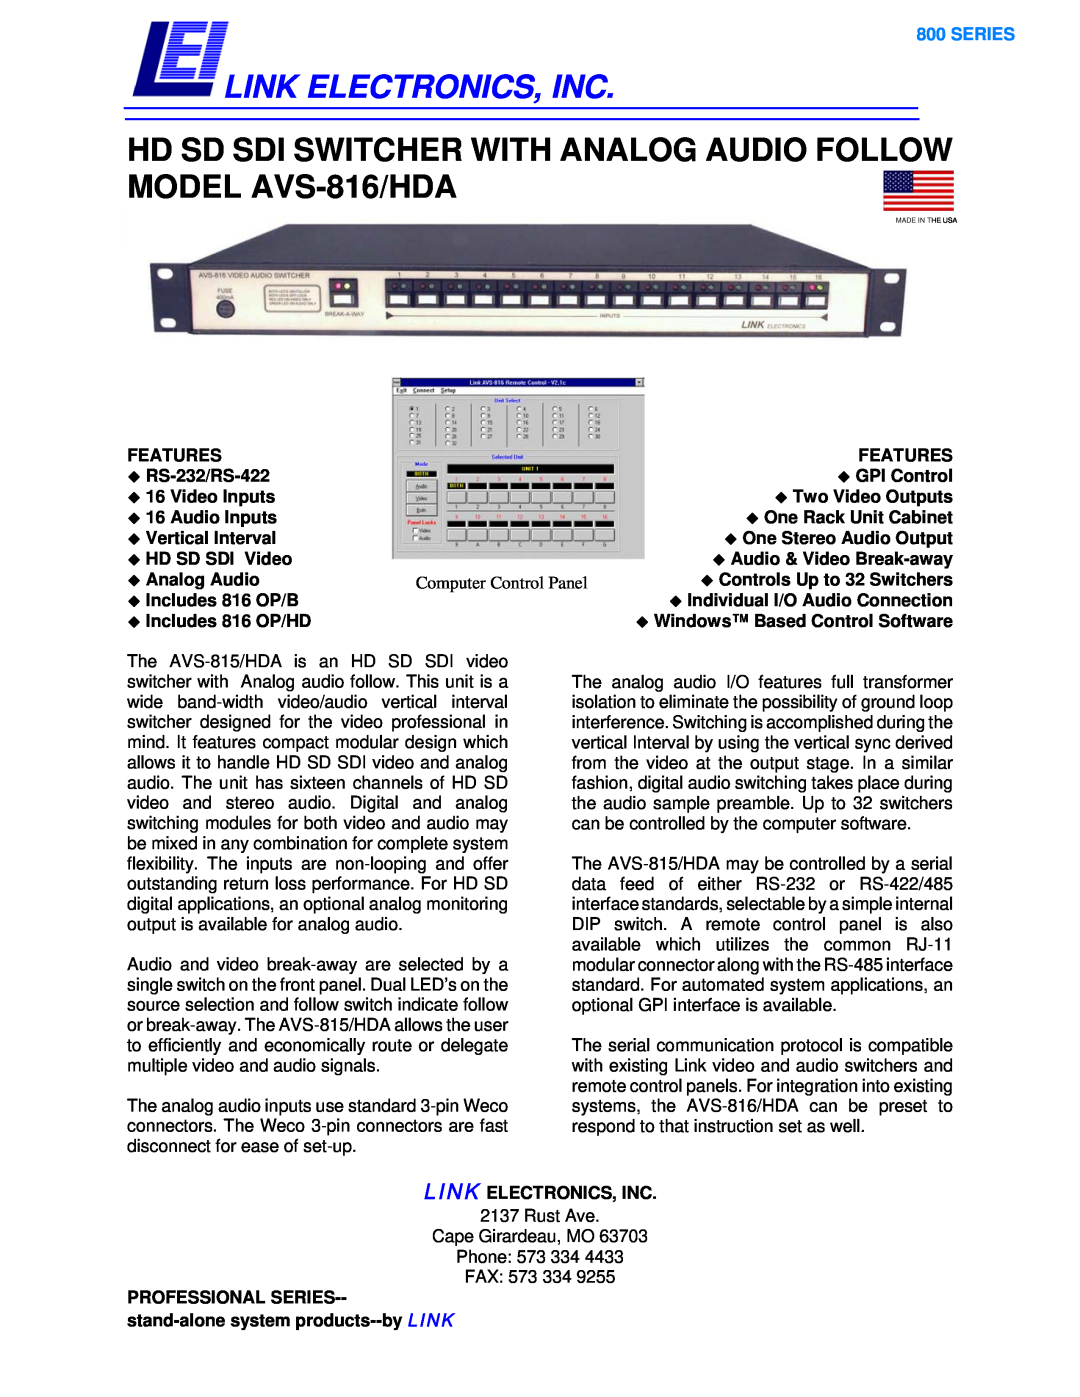 Link electronic manual Link Electronics, Inc, HD SD SDI SWITCHER WITH ANALOG AUDIO FOLLOW MODEL AVS-816/HDA, Series 